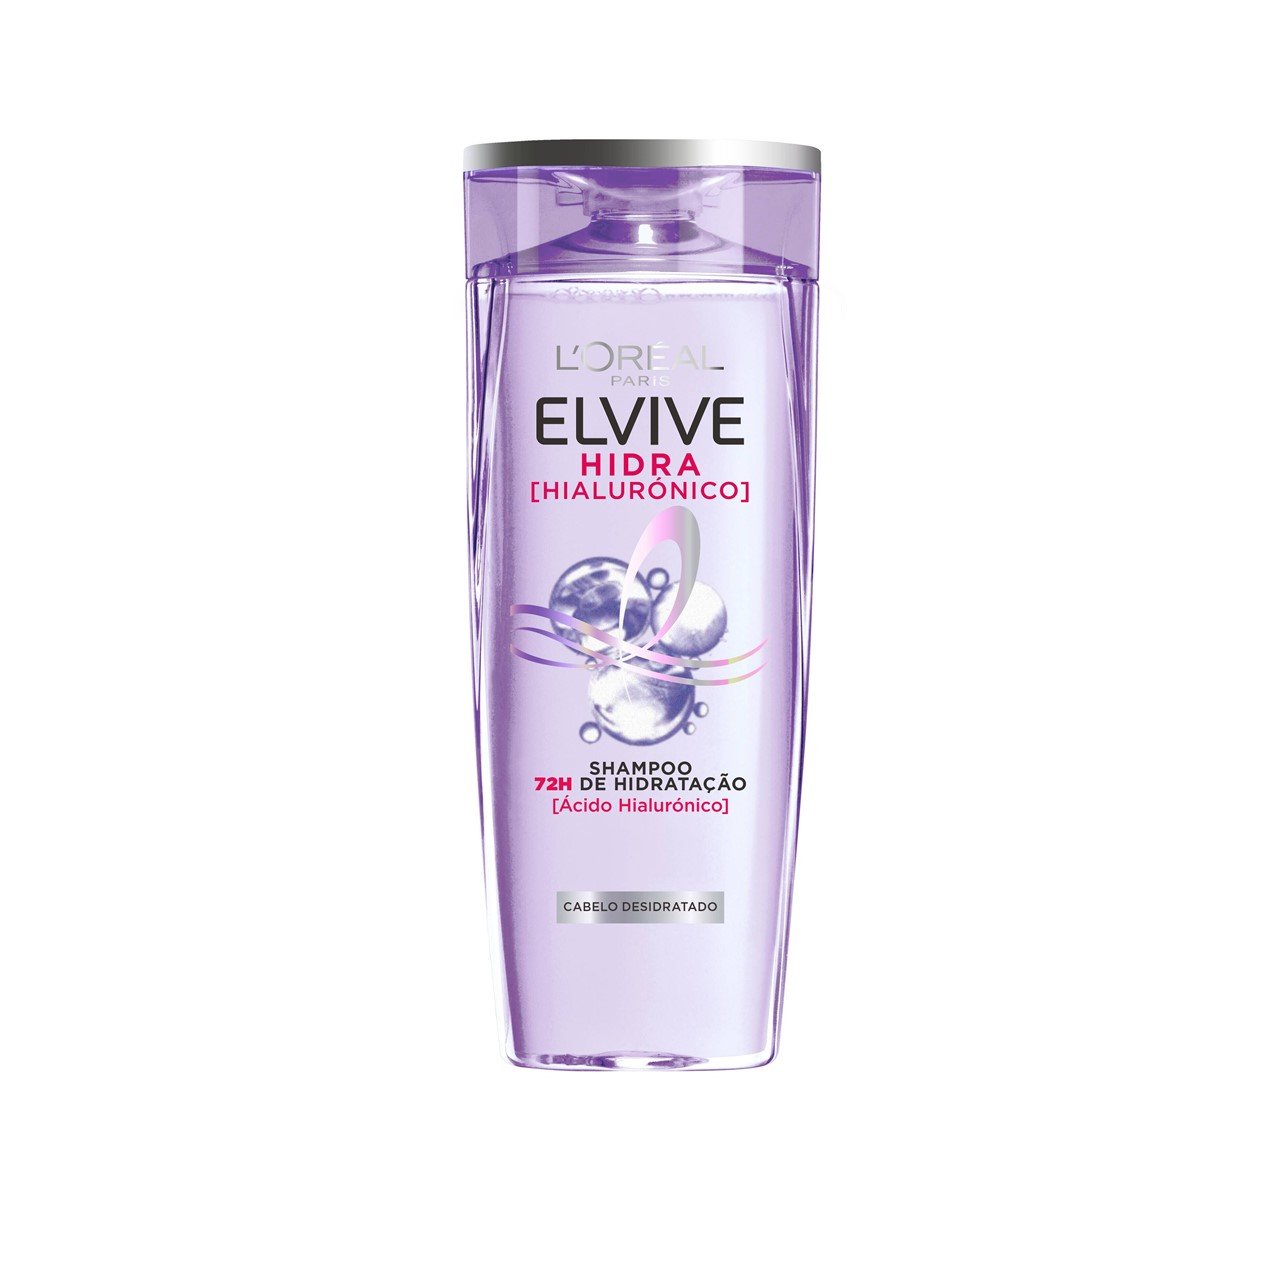 L'Oréal Paris Elvive Hydra [Hyaluronic] Shampoo 400ml (13.53fl oz)